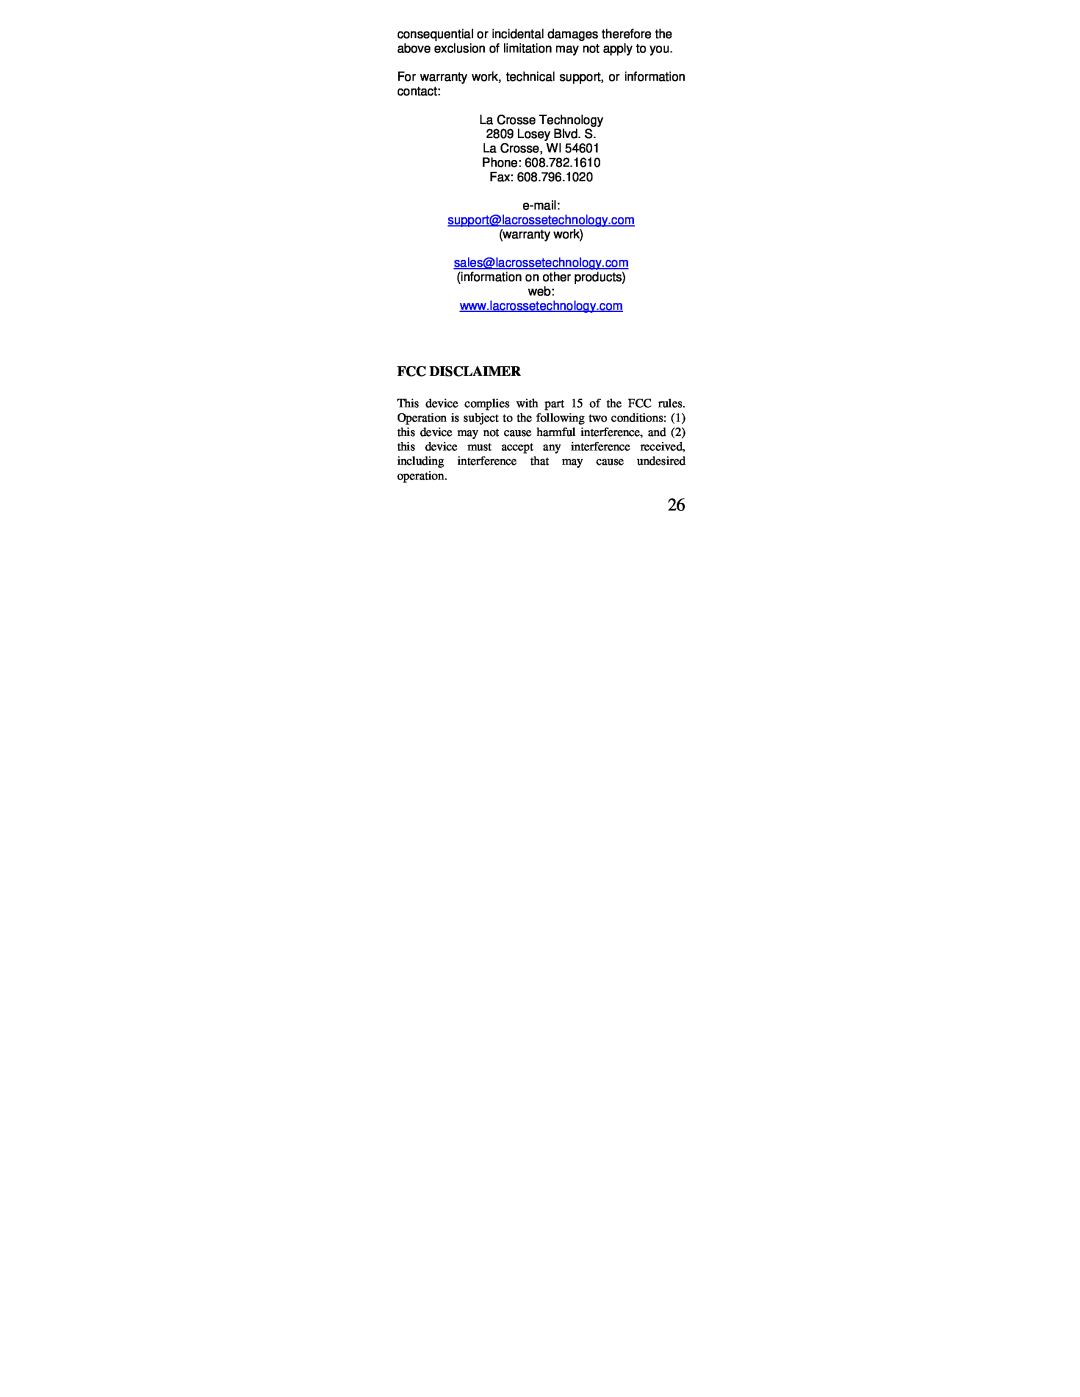 La Crosse Technology WS-9117U instruction manual Fcc Disclaimer, support@lacrossetechnology.com 